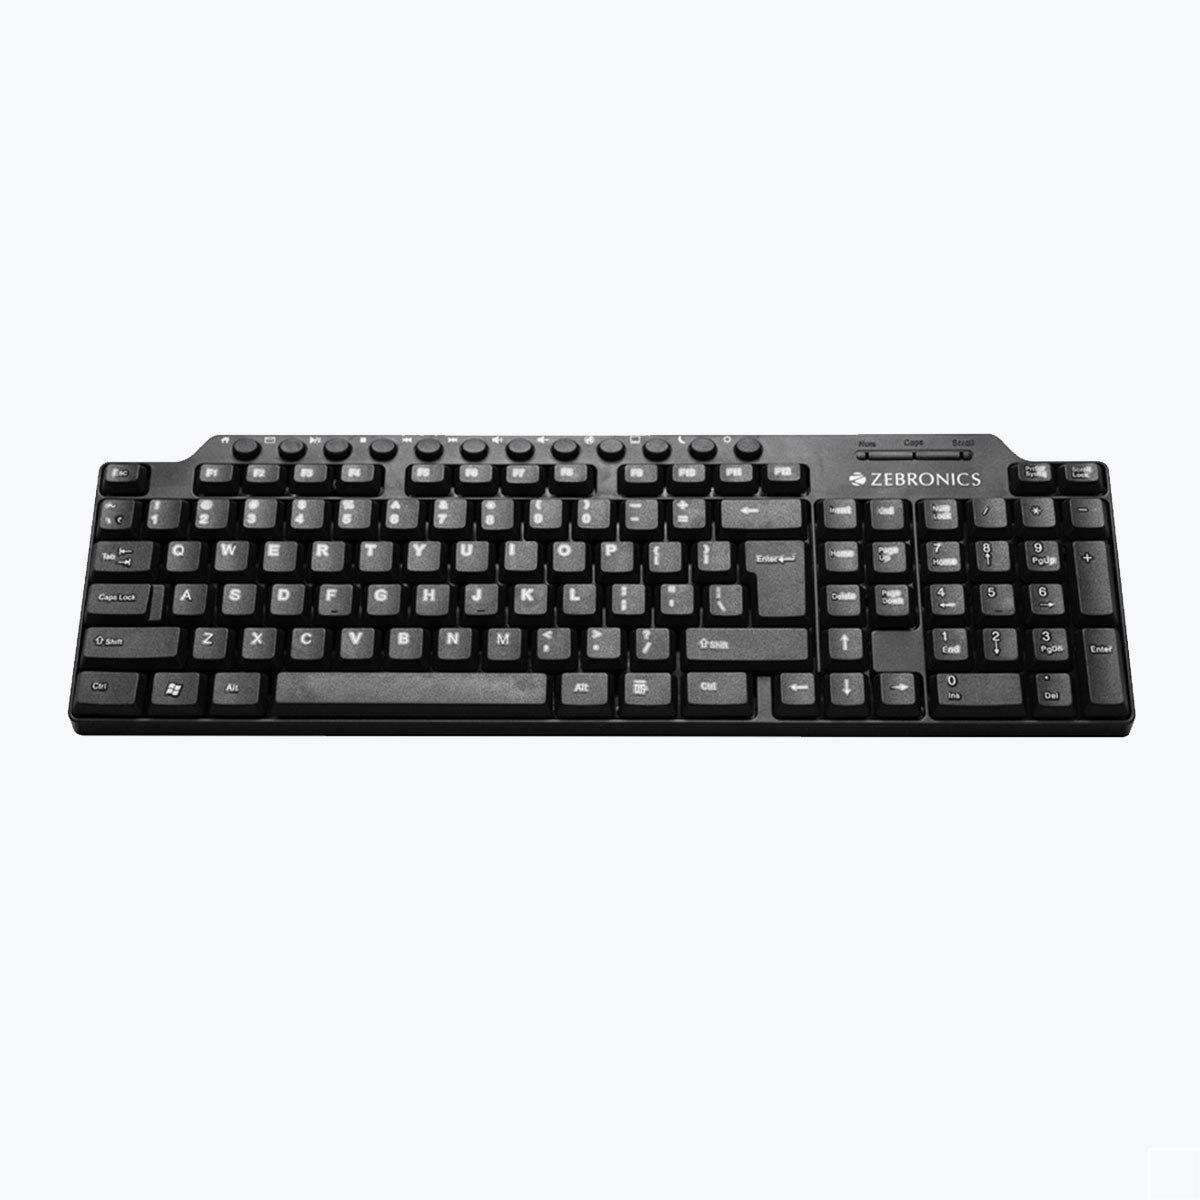 ZEB-KM2100 - Multimedia Keyboard - Zebronics